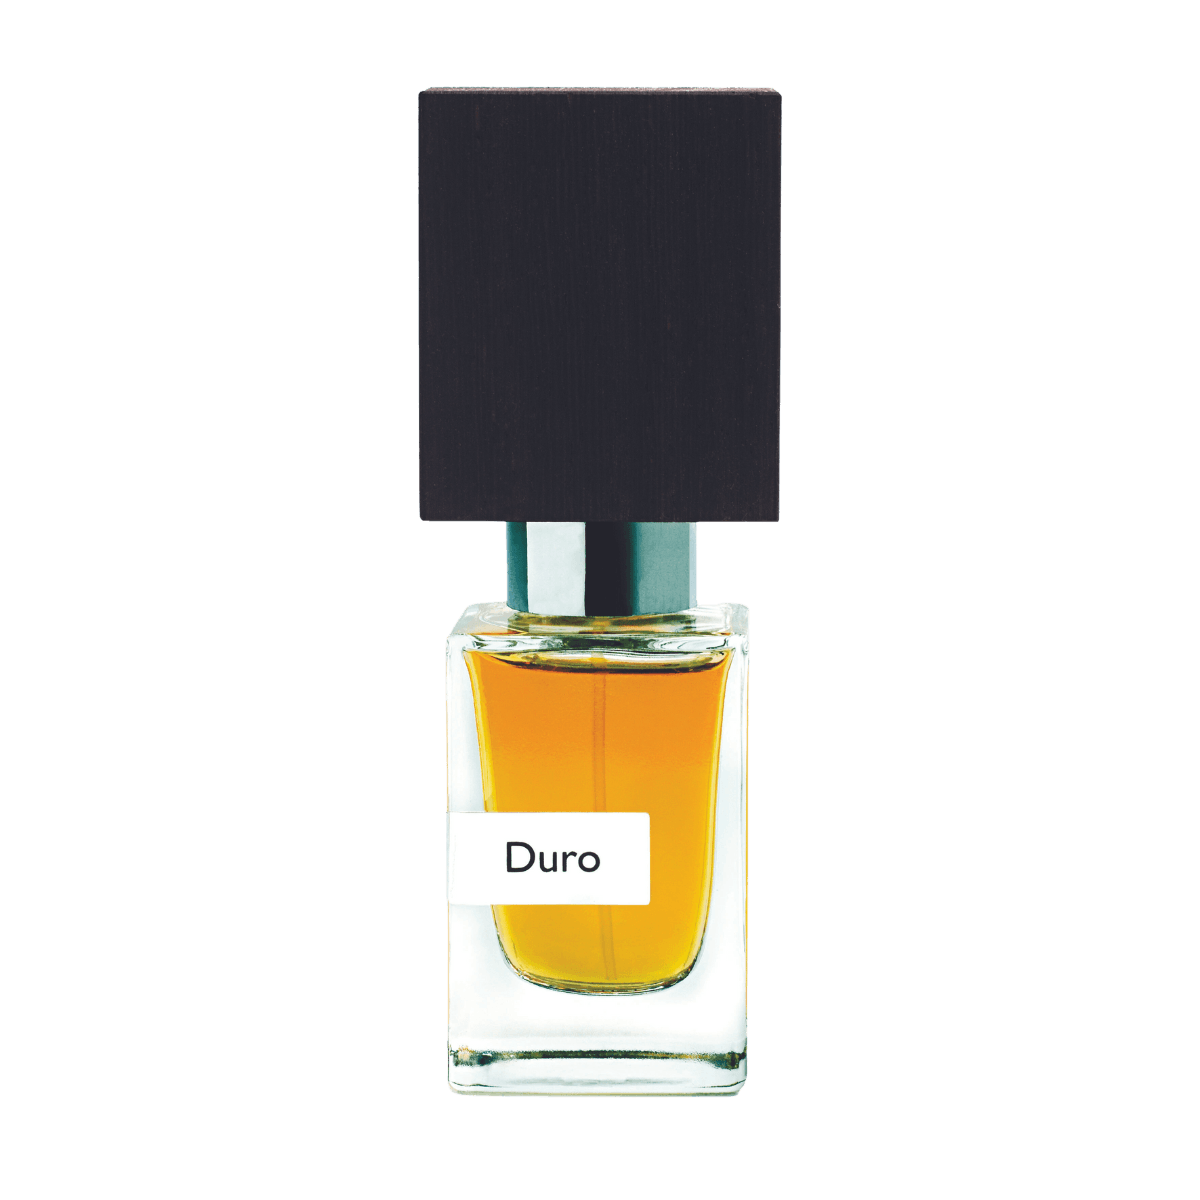 Image of Duro extrait de parfum 30 ml by the perfume brand Nasomatto